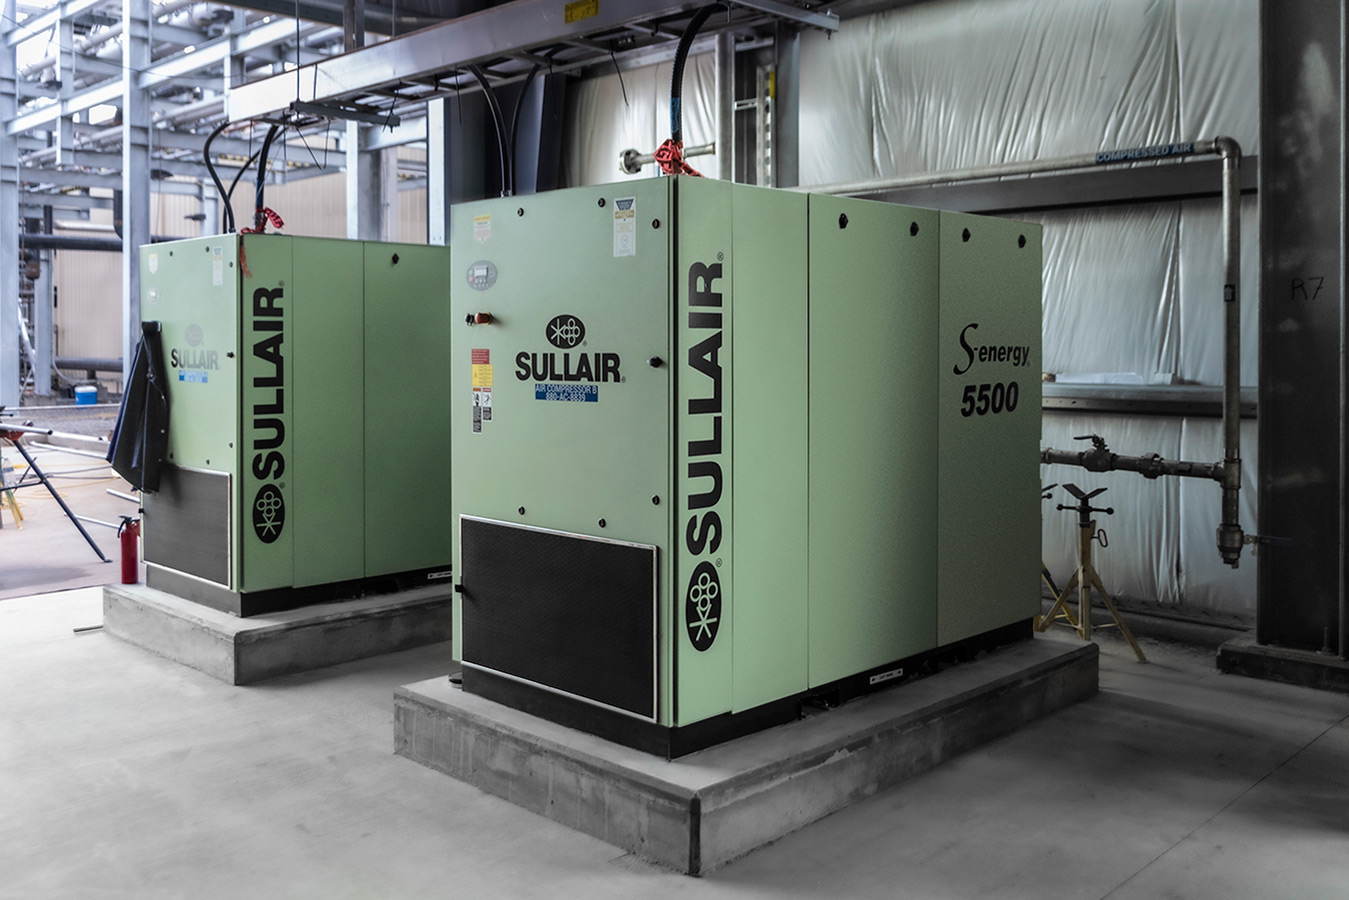 Sullair S-energy 5500 industrial air compressor installation